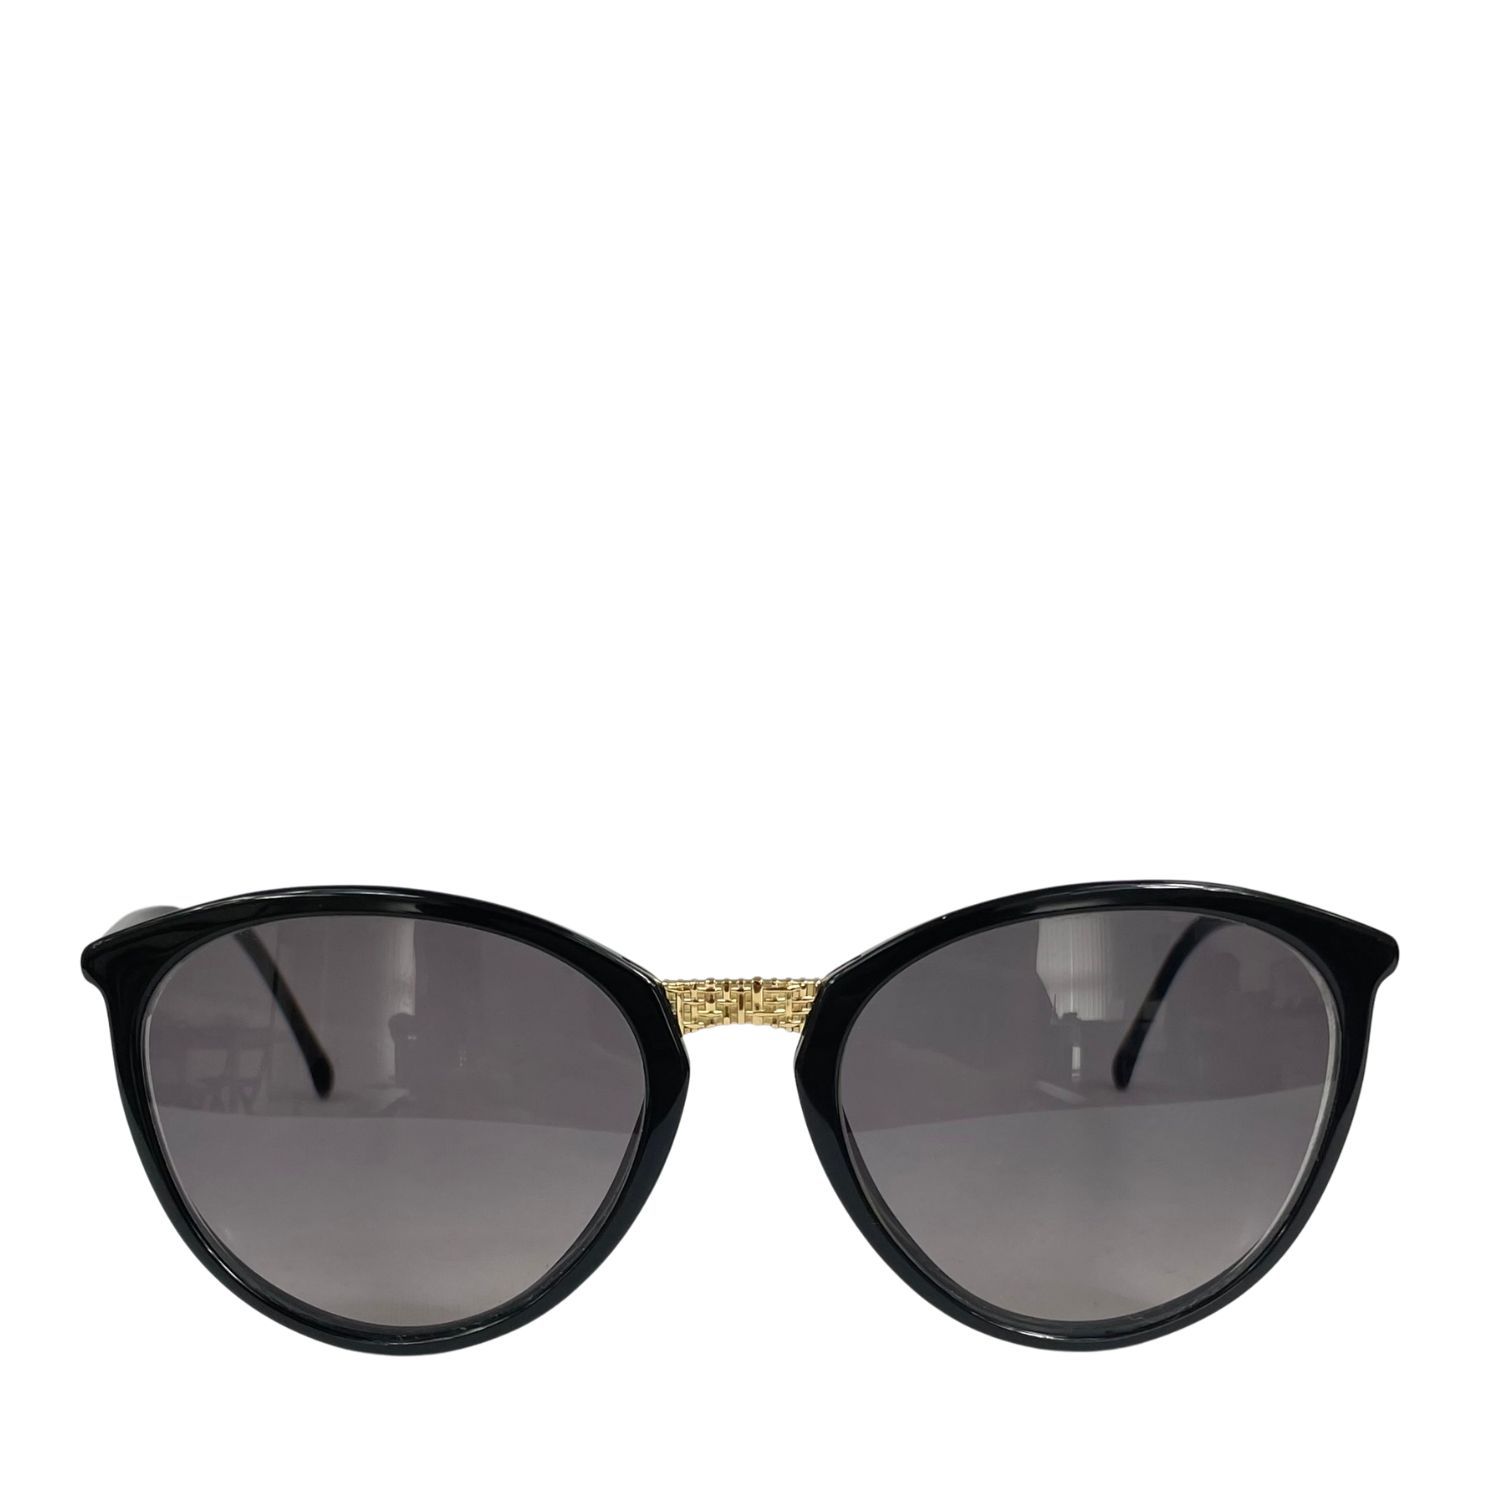 Óculos Chanel 5382 - Inffino | Brechó de Luxo Online | Peças Autênticas